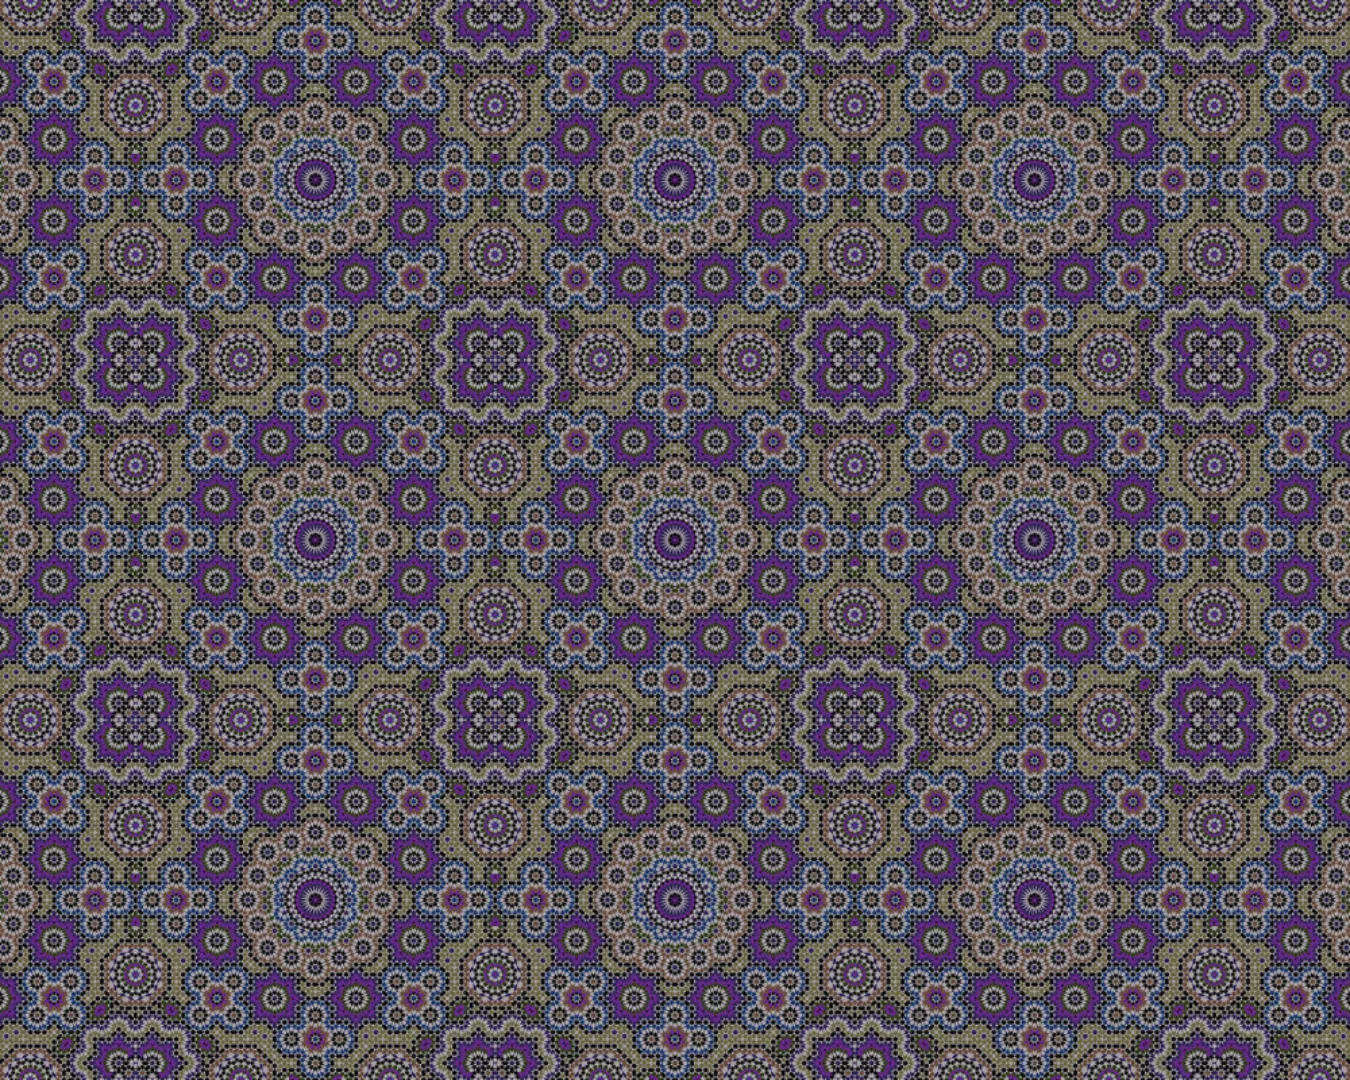 Fototapete "Mosaic III Purple" 4,00x2,50 m / Glattvlies Brillant günstig online kaufen